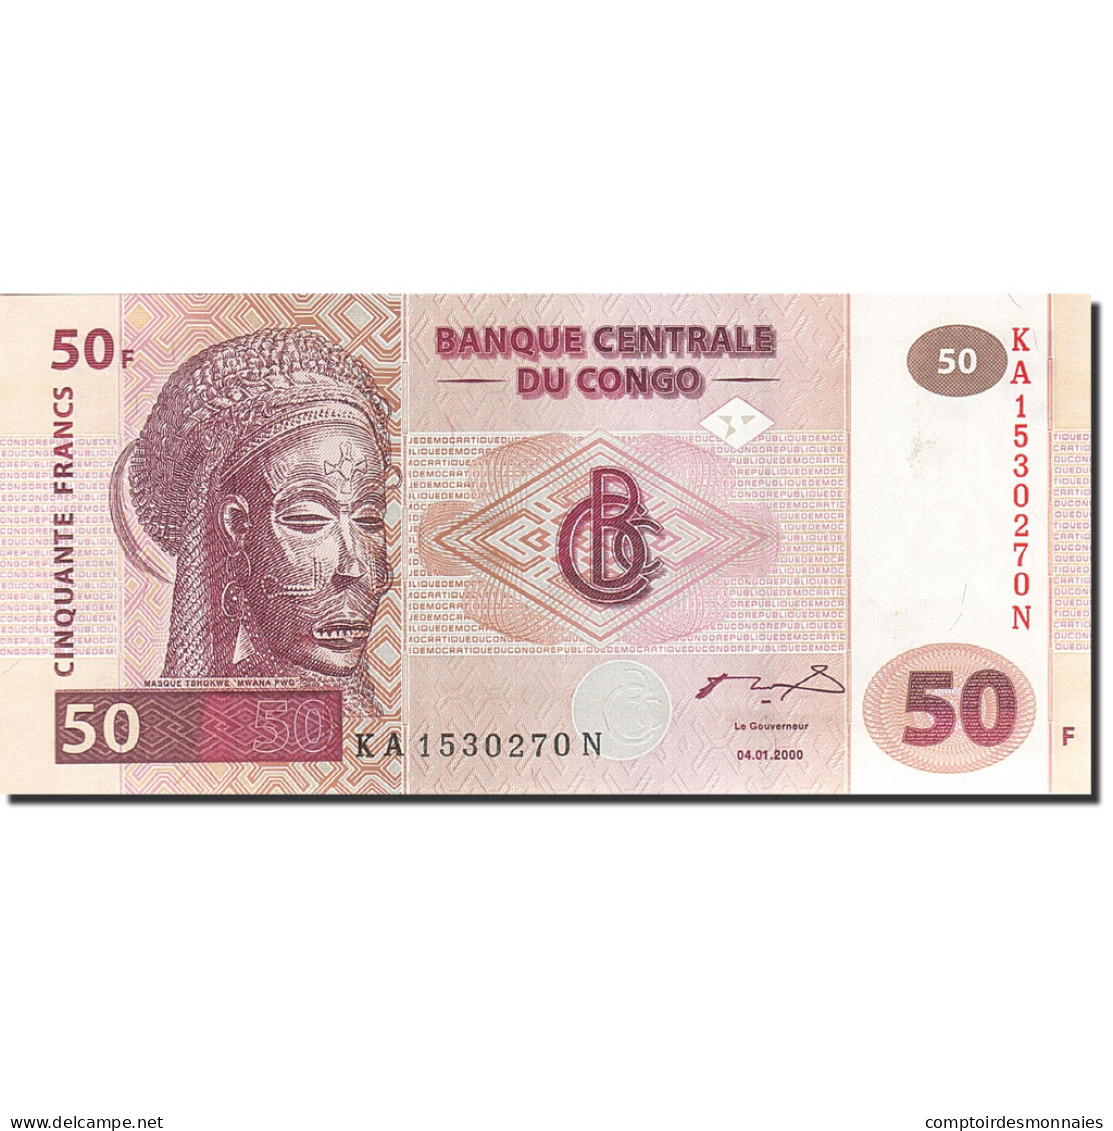 Billet, Congo Democratic Republic, 50 Francs, 2000, 2000-01-04, KM:91a, SPL - Republic Of Congo (Congo-Brazzaville)